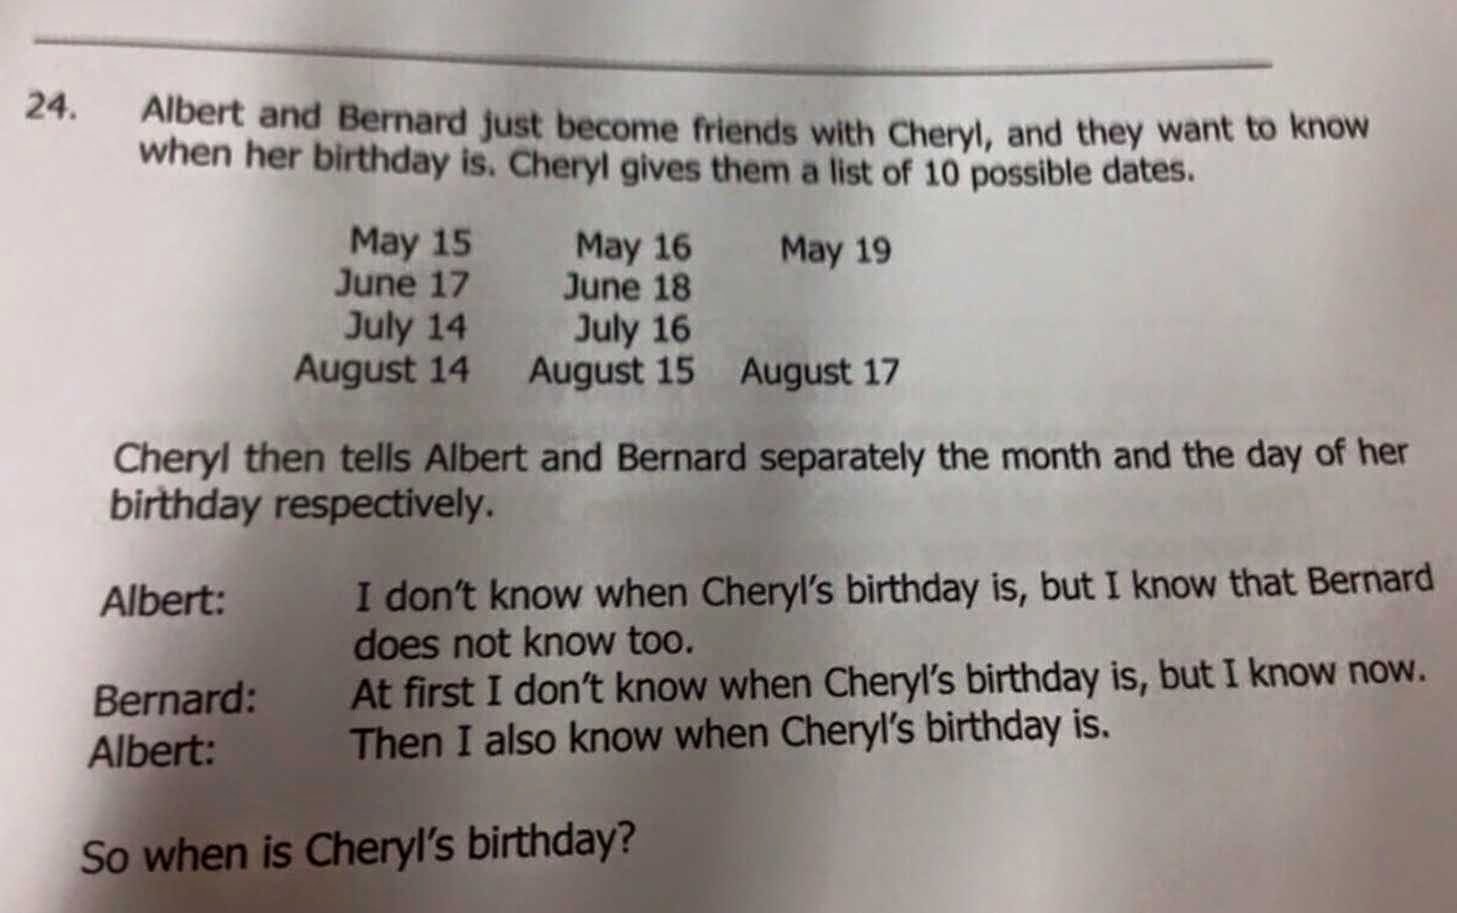 When is Cheryl's Birthday?